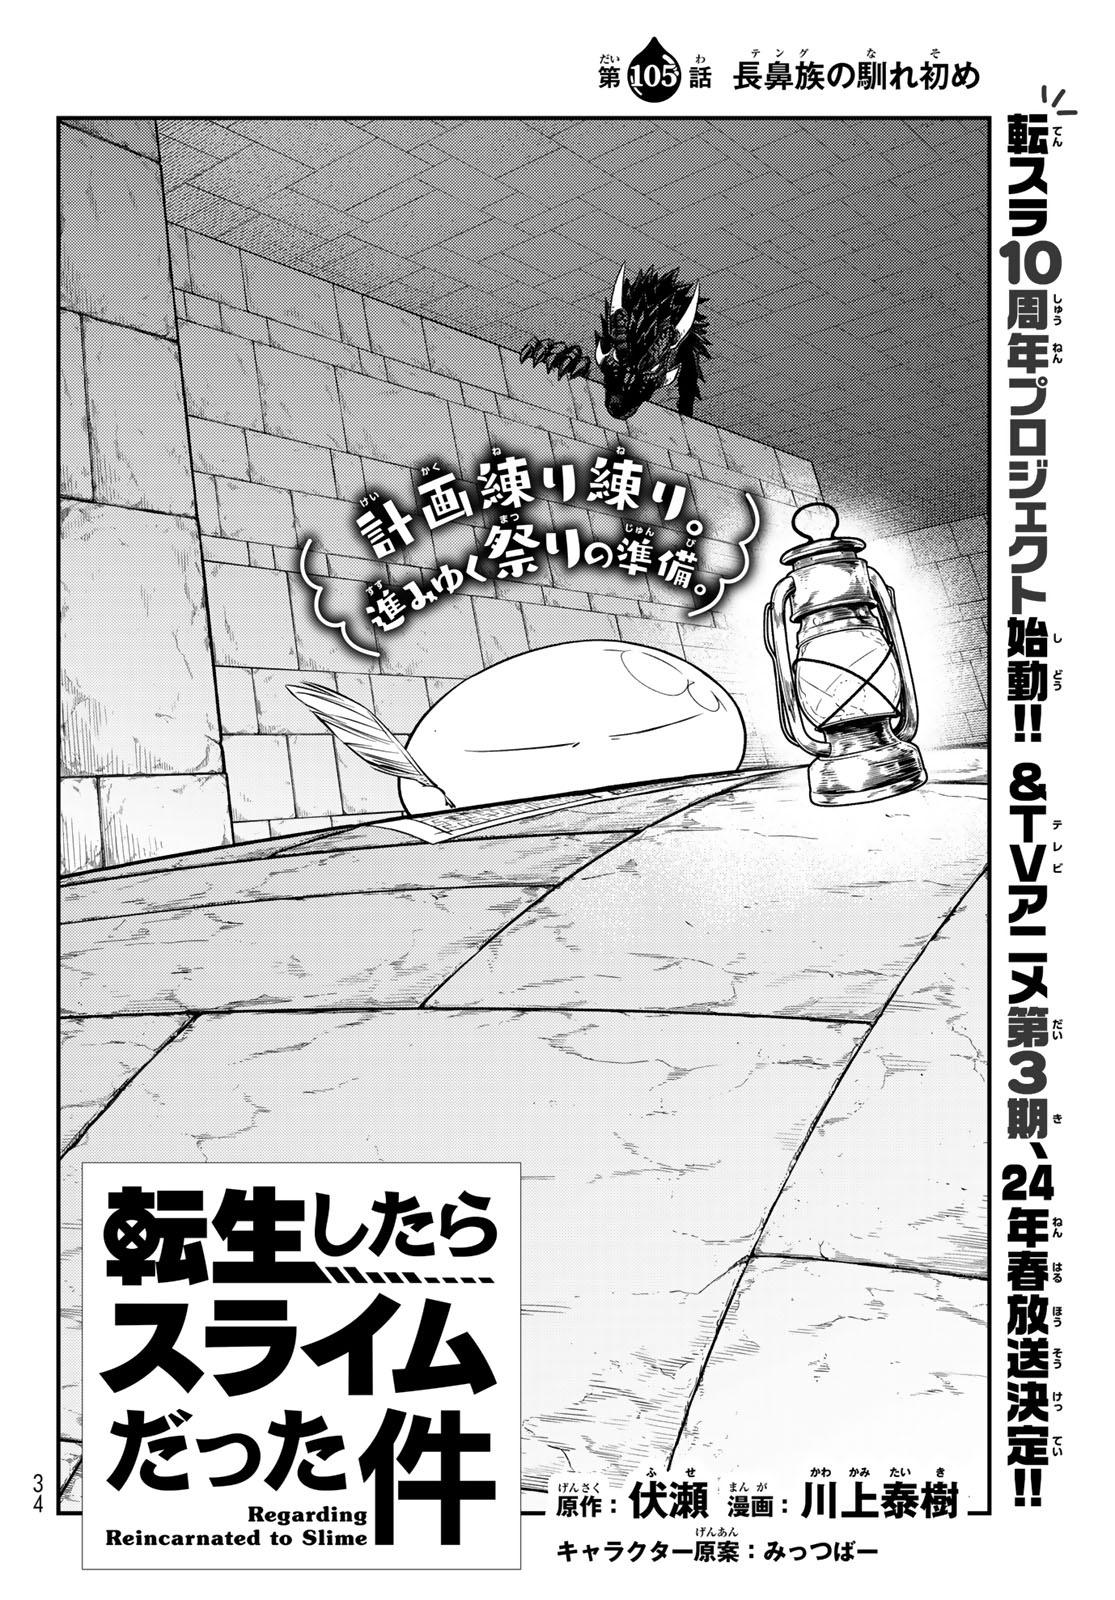 DISC] Tensei Shitara Slime Datta Ken Chapter 91 (Tempest) : r/manga